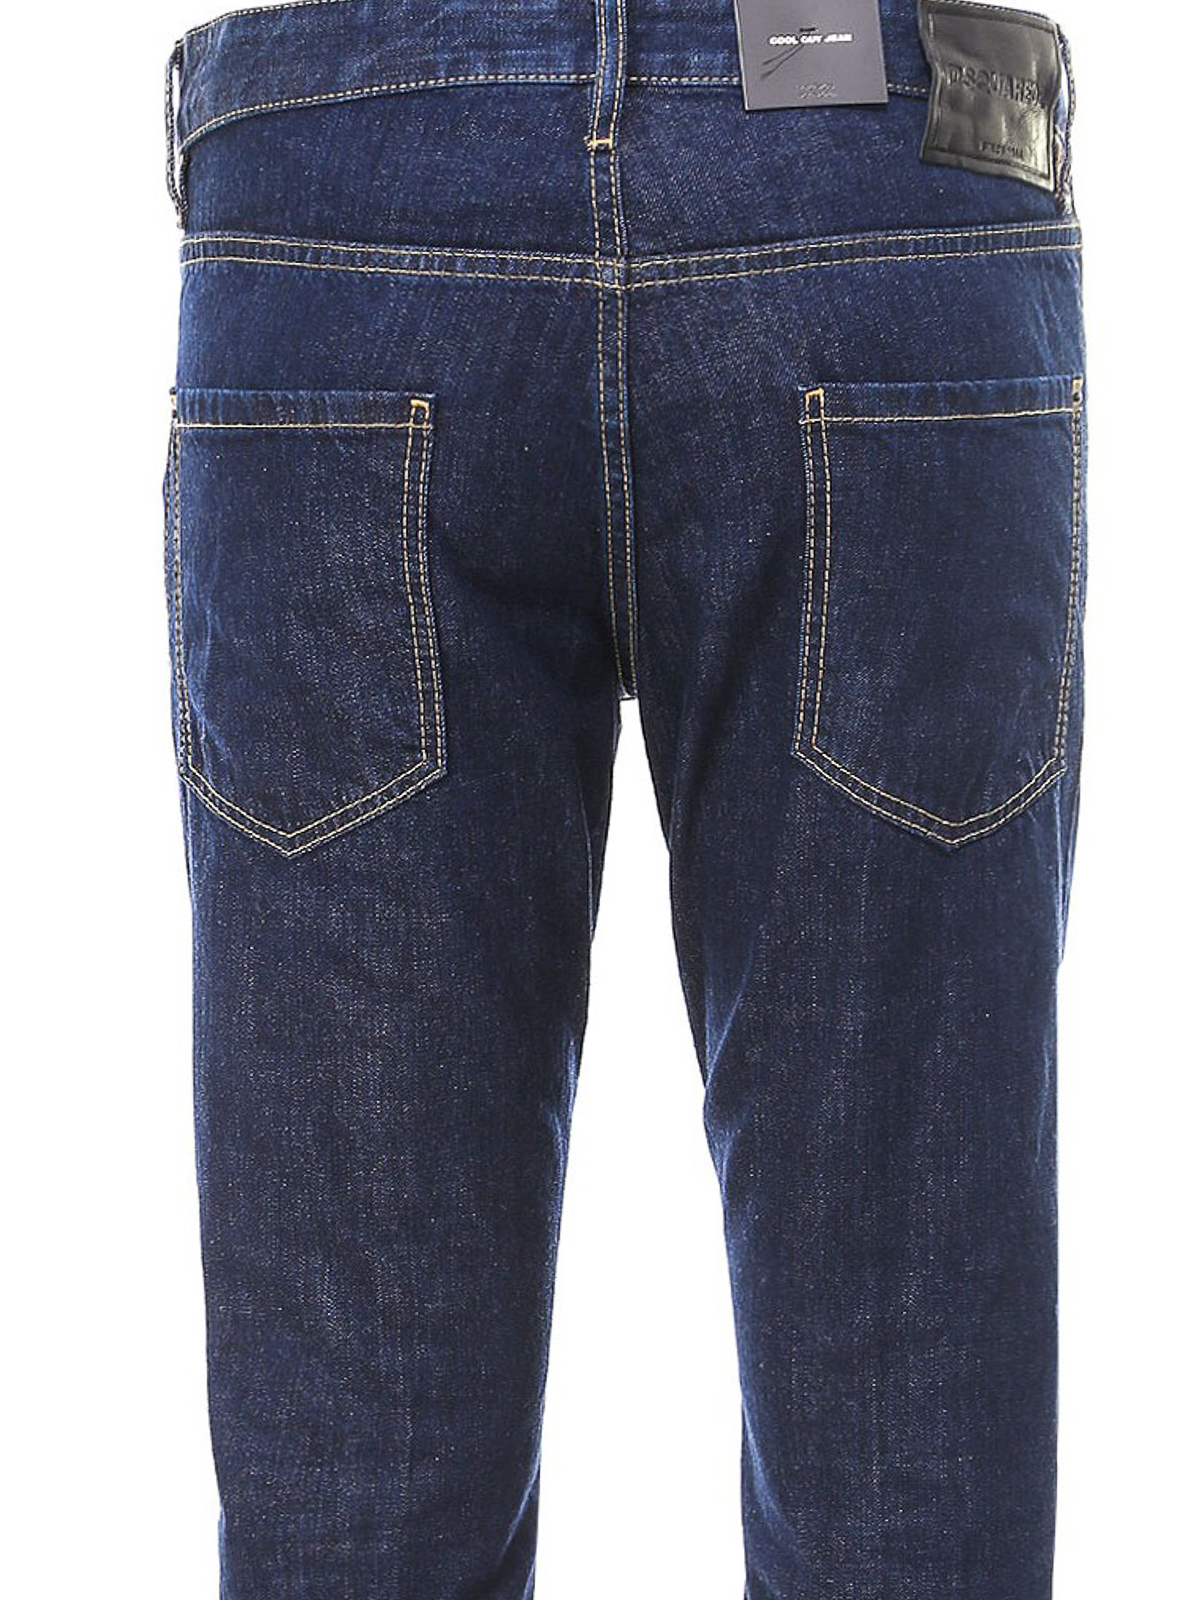 kapperszaak Konijn Volgen Skinny jeans Dsquared2 - Jeans with contrasting stitching -  S74LB0816S30309470